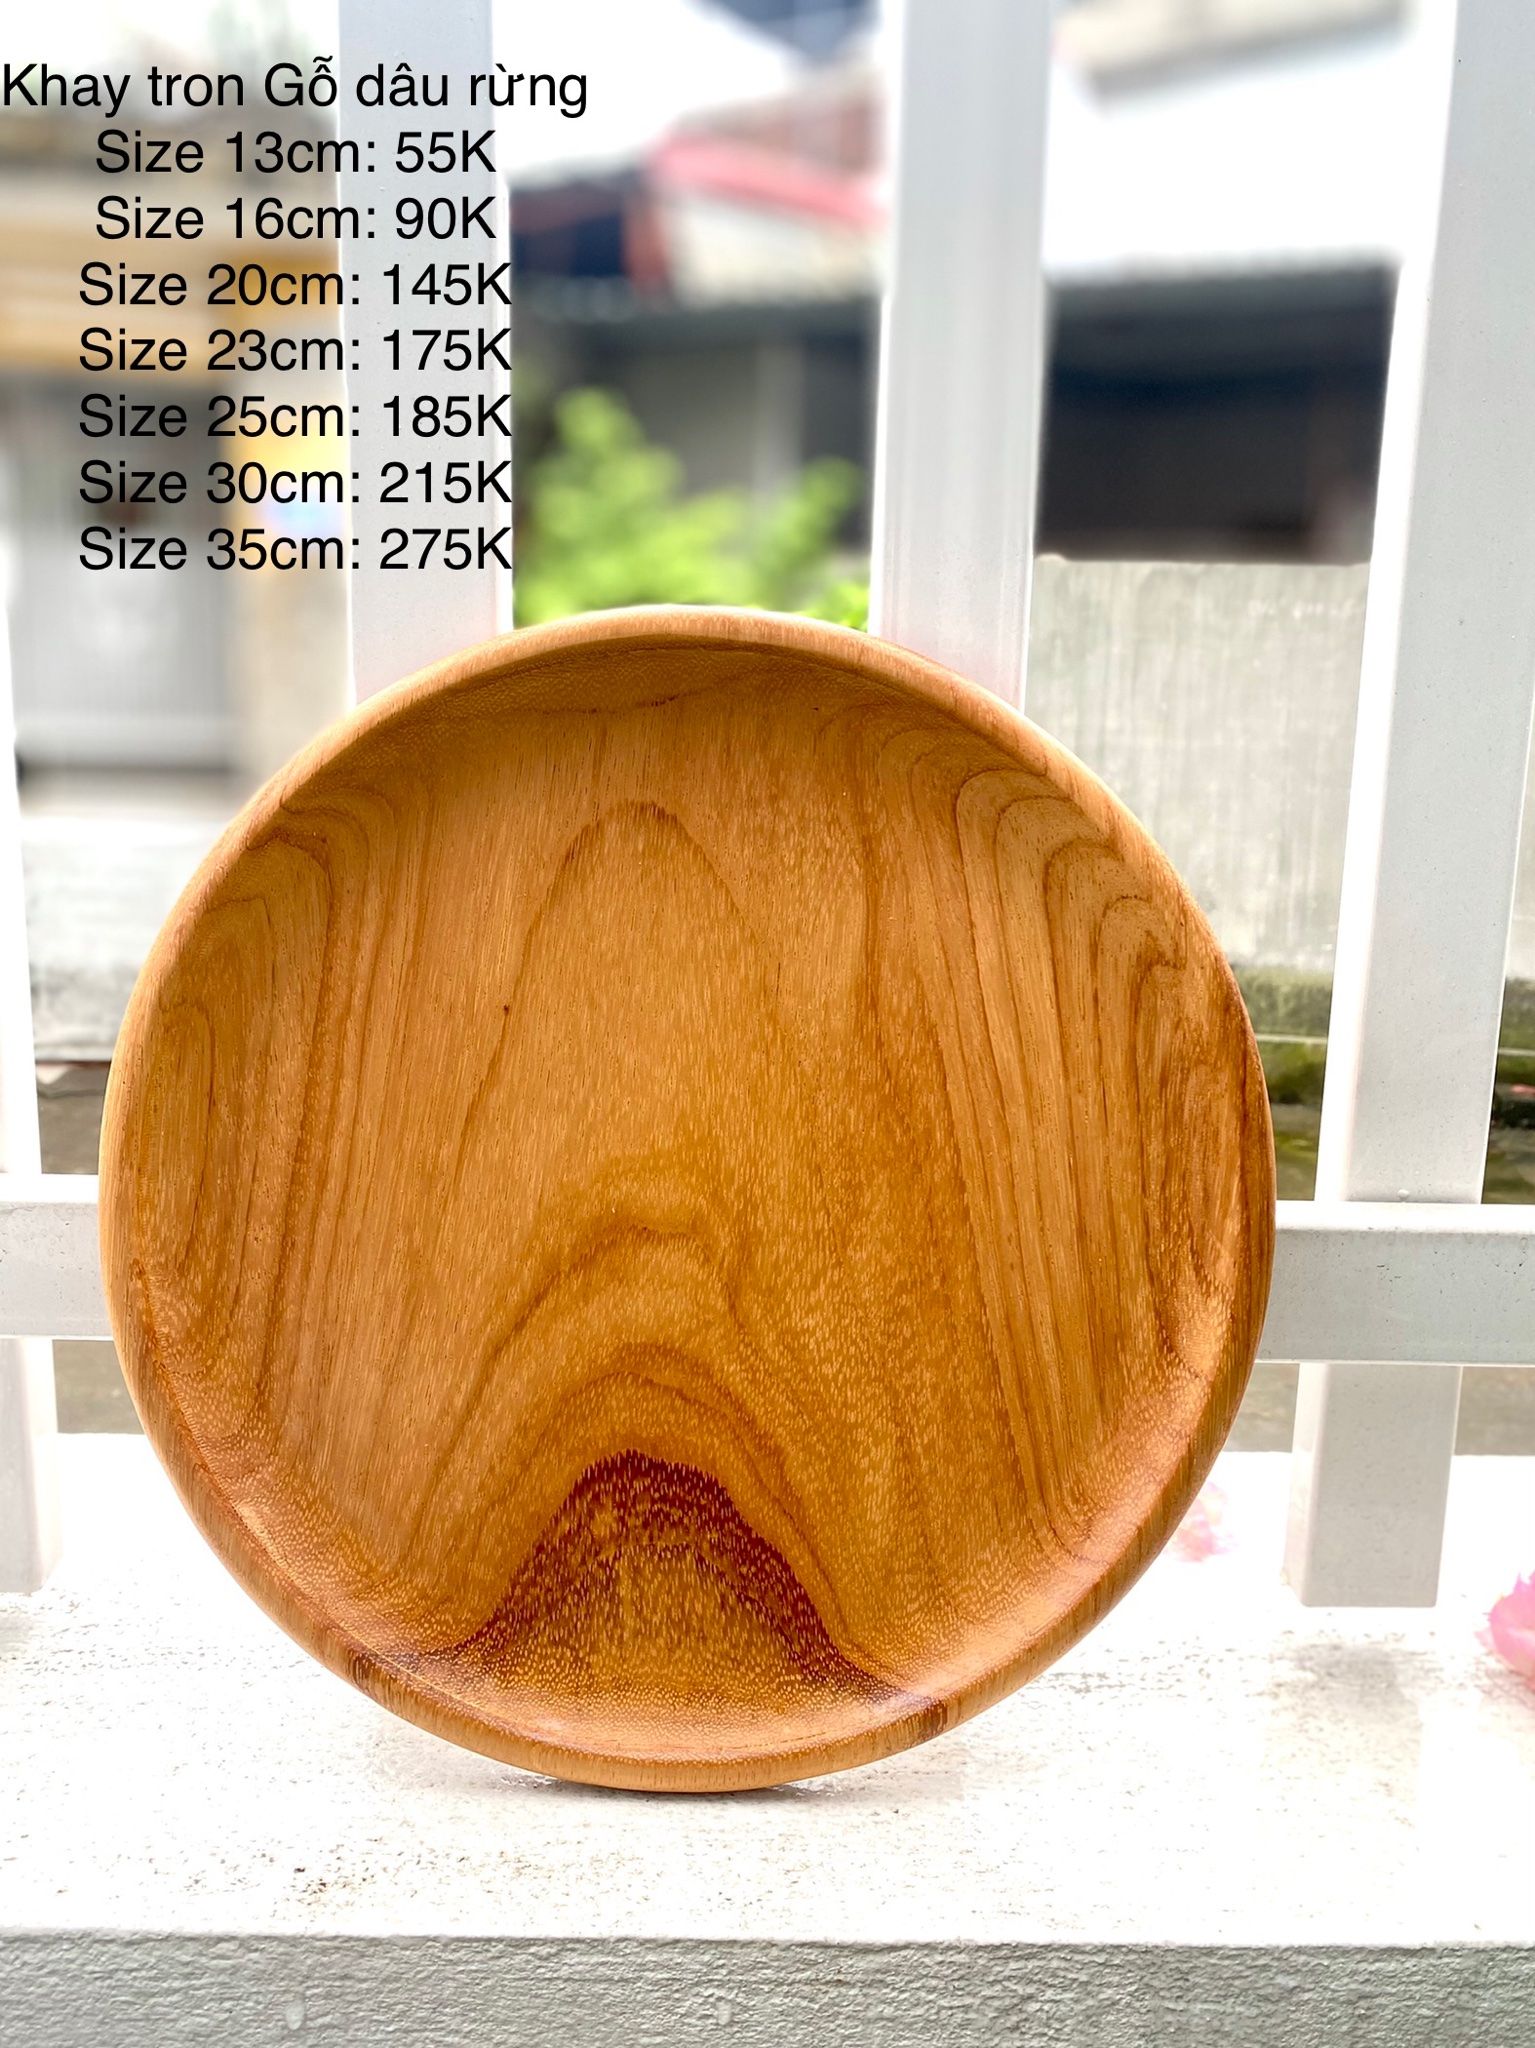 124 - Khay tròn gỗ dâu rừng các size - MOCK0038